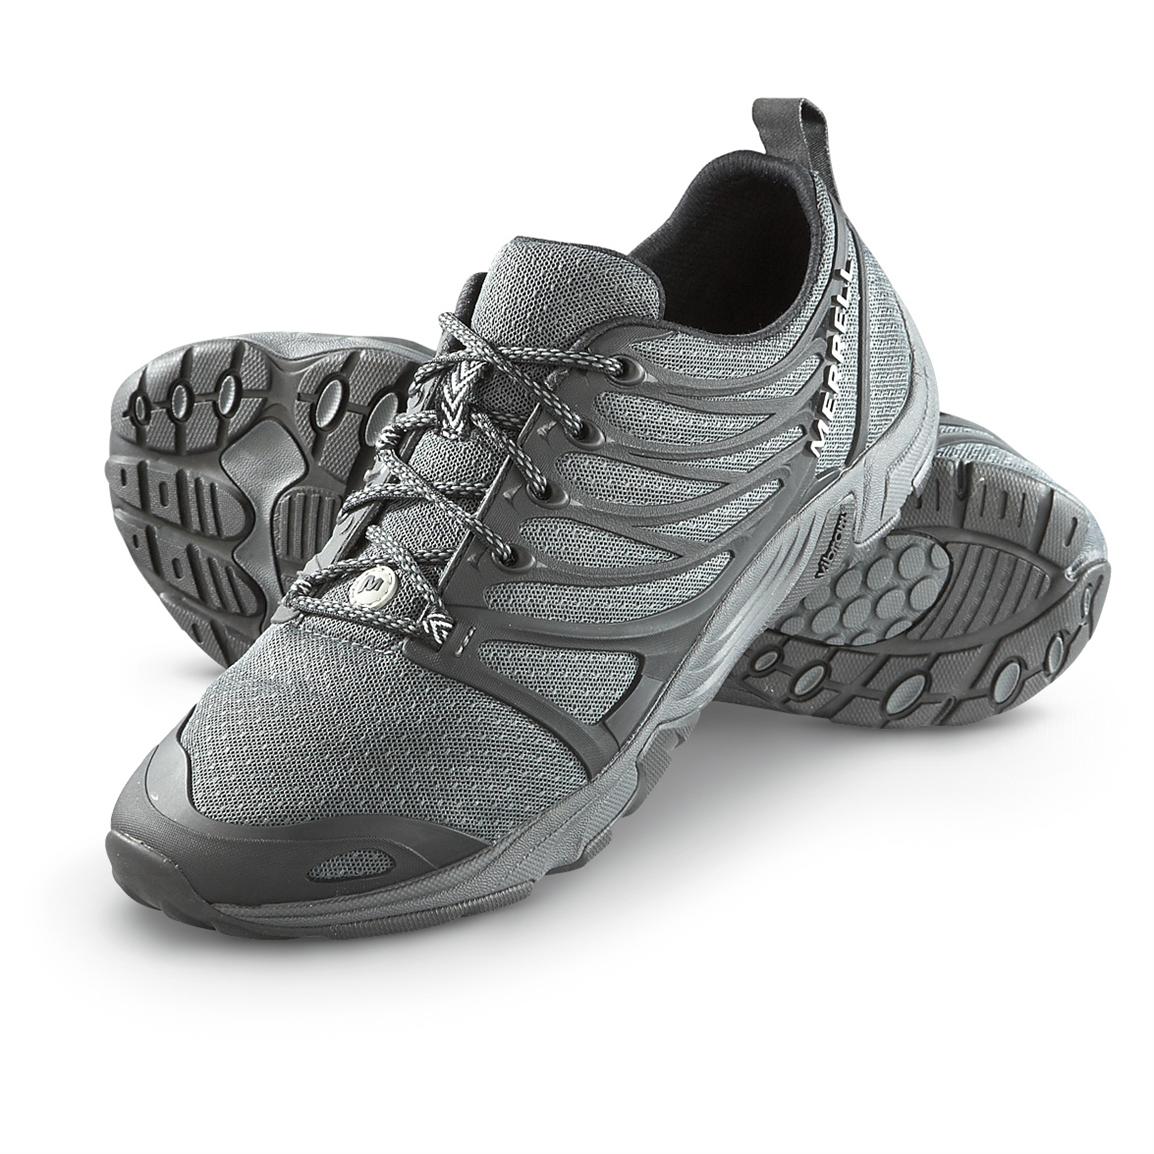 Men's Merrell Circuit Access Training Shoes, Black - 591289, Running ...